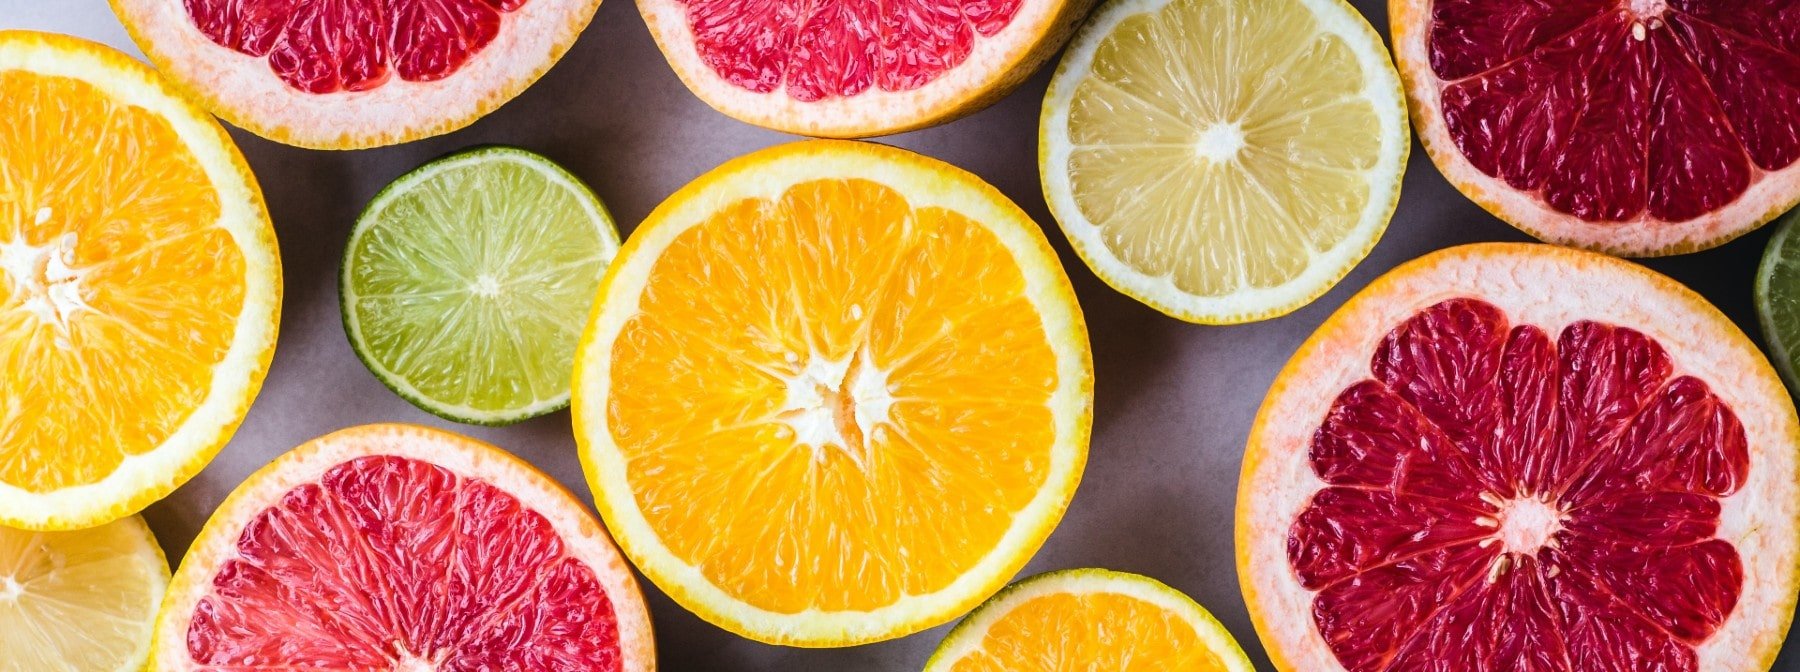 20 Foods High In Vitamin C